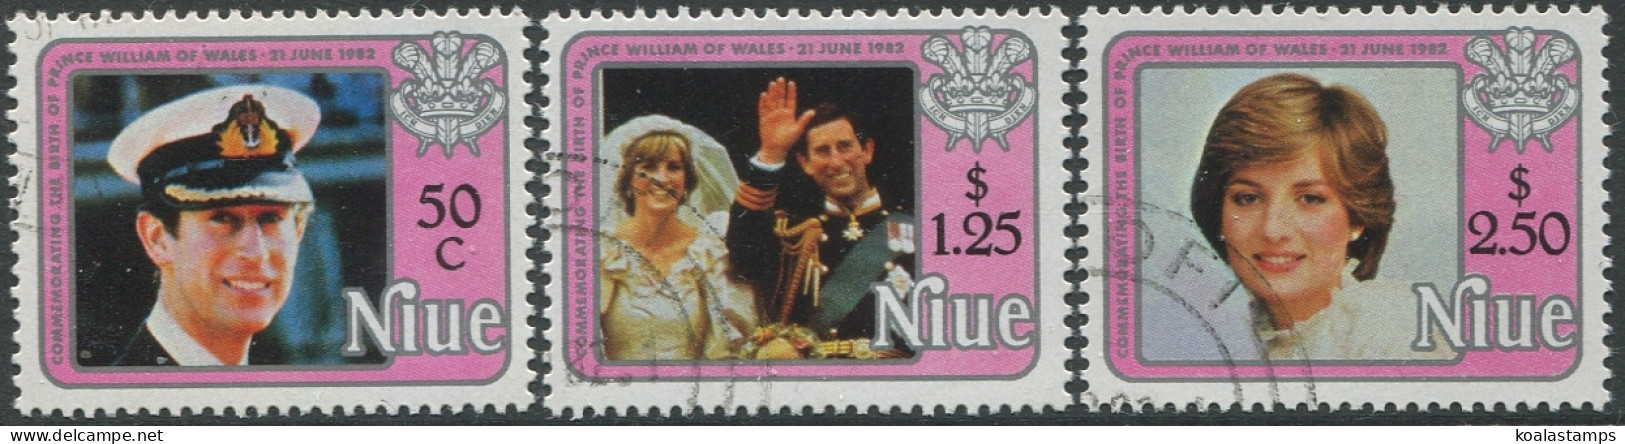 Niue 1982 SG465-467 Birth Prince William Set FU - Niue